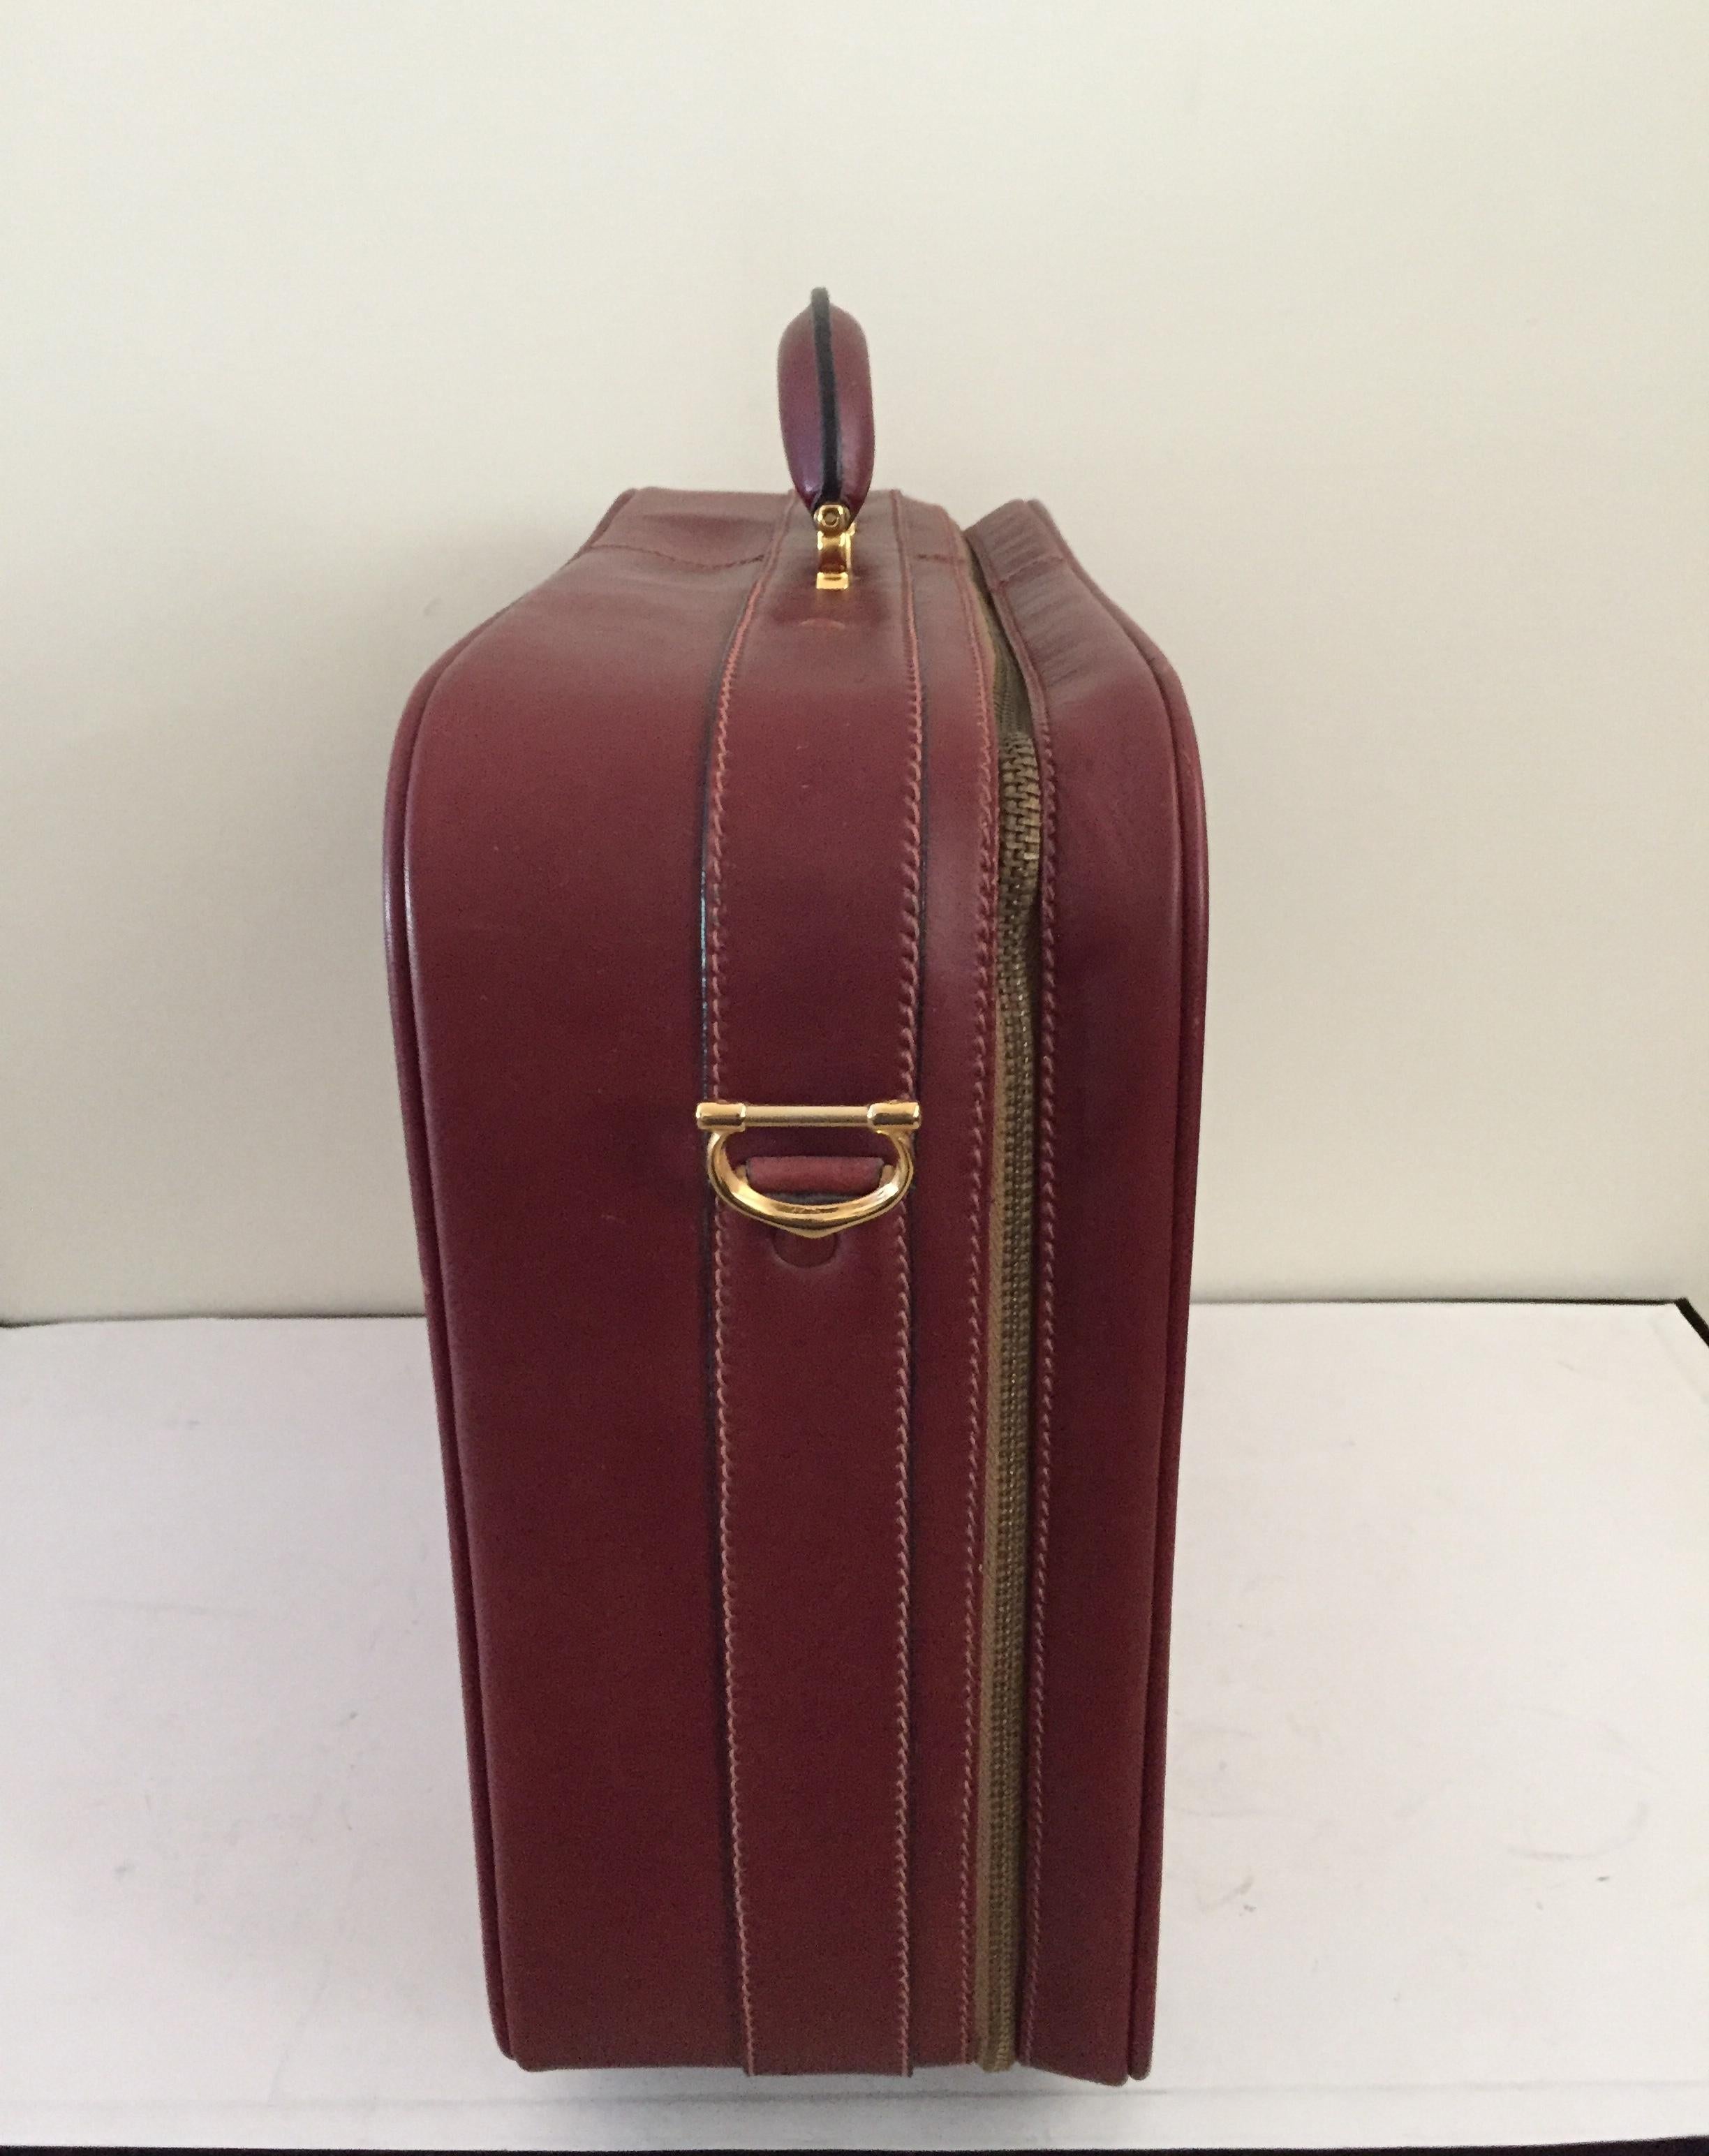 Cartier Les Must de Cartier Burgundy Leather Travel Overnight Suitcase / Luggage 5